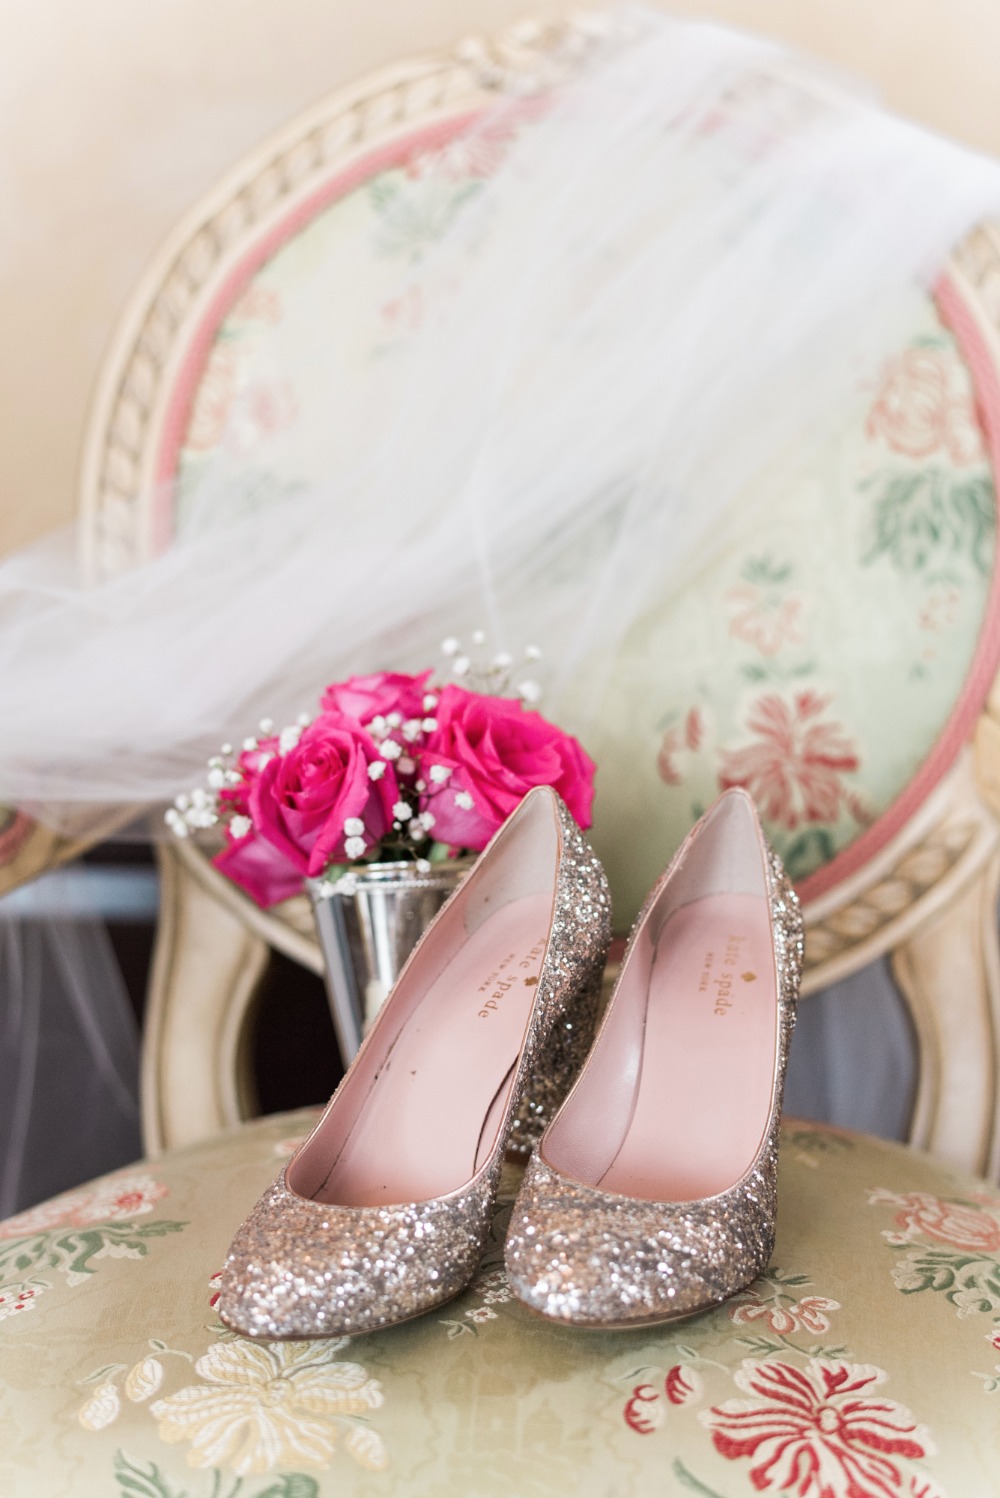 Sparkly Kate Spade wedding heels